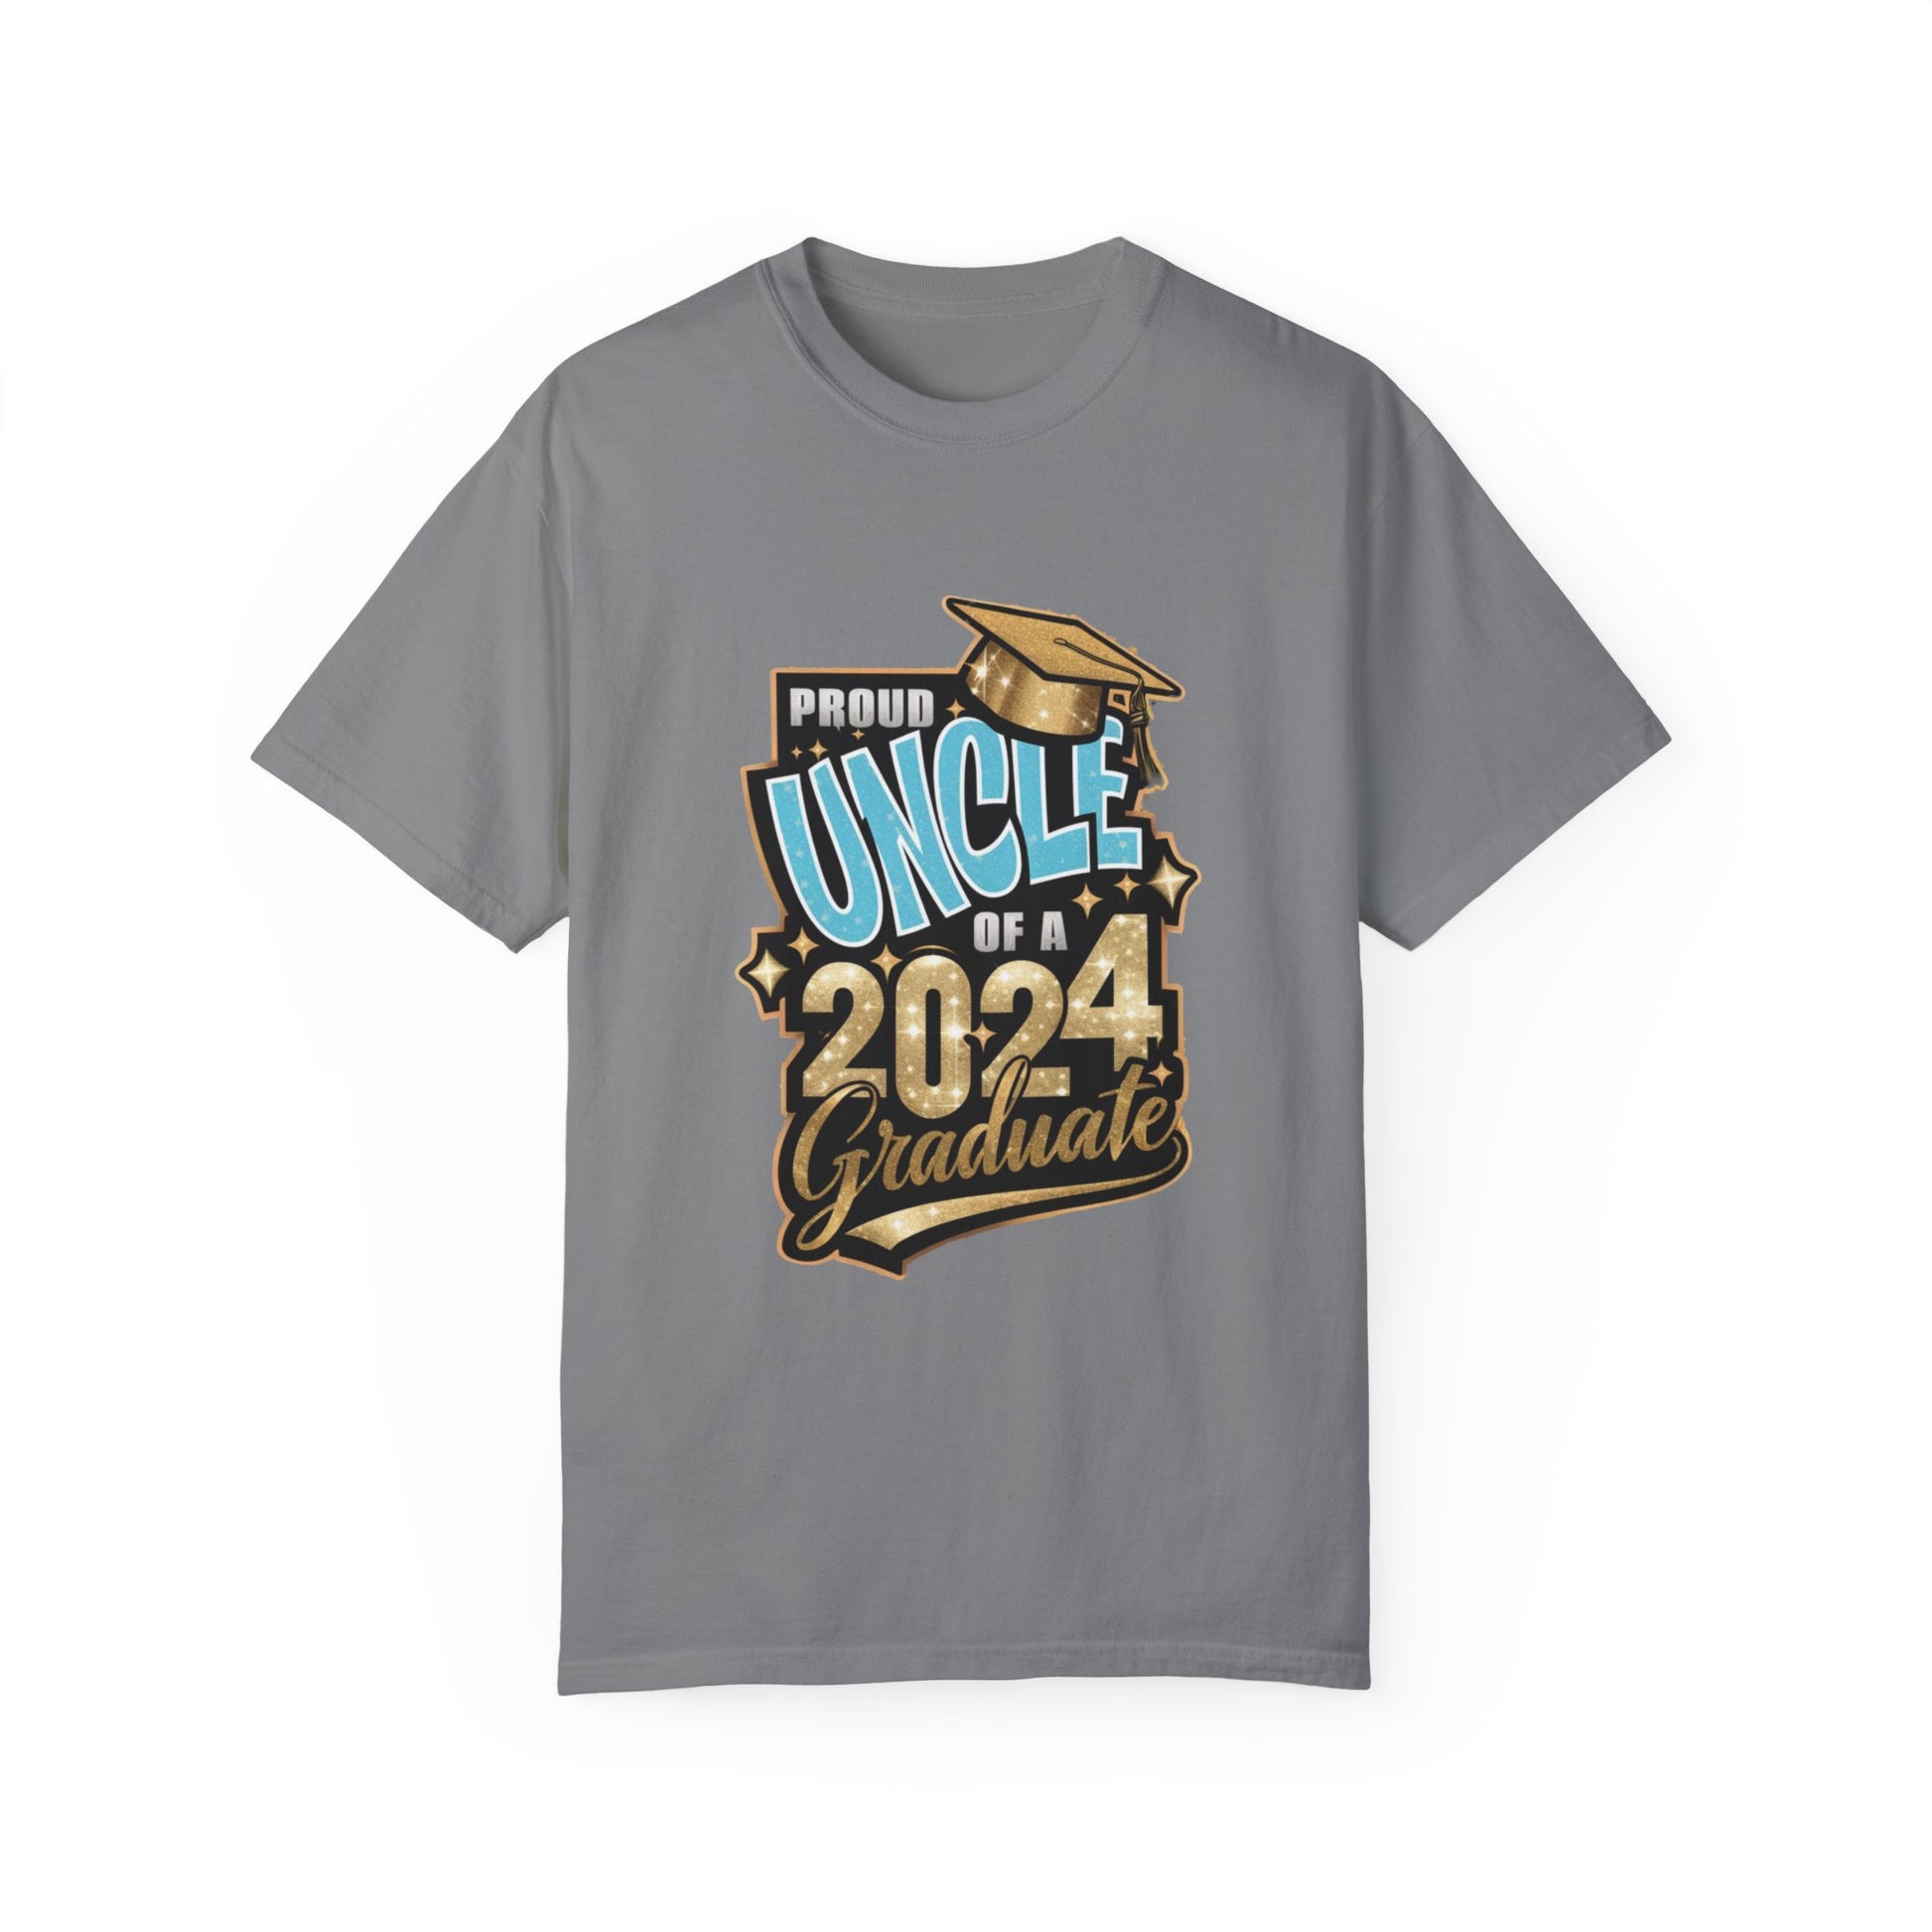 Proud Uncle of a 2024 Graduate Unisex Garment-dyed T-shirt Cotton Funny Humorous Graphic Soft Premium Unisex Men Women Grey T-shirt Birthday Gift-9